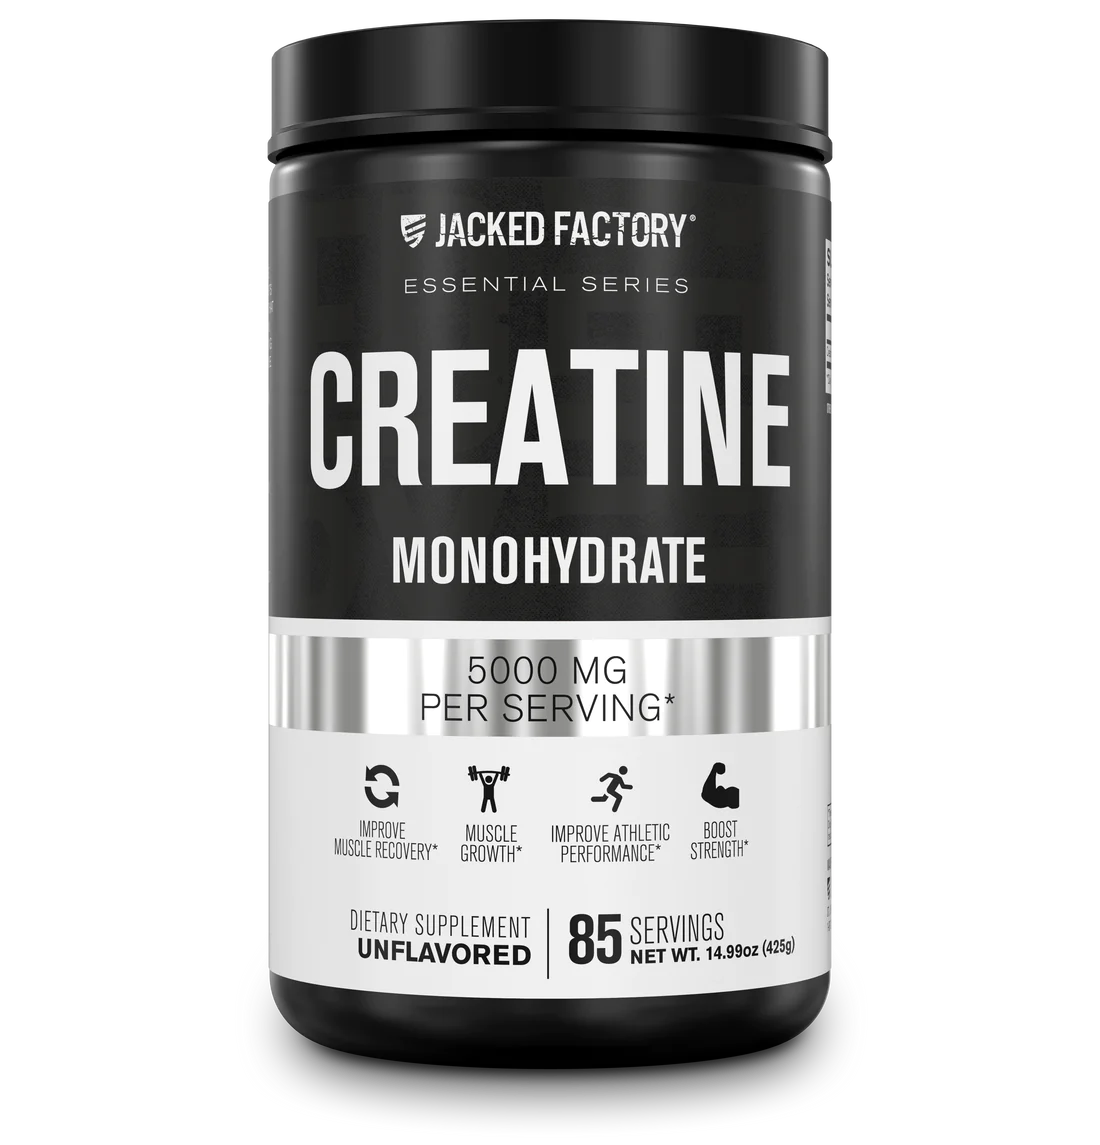 jacked factory creatine - 11 Best Creatine Supplements of 2023